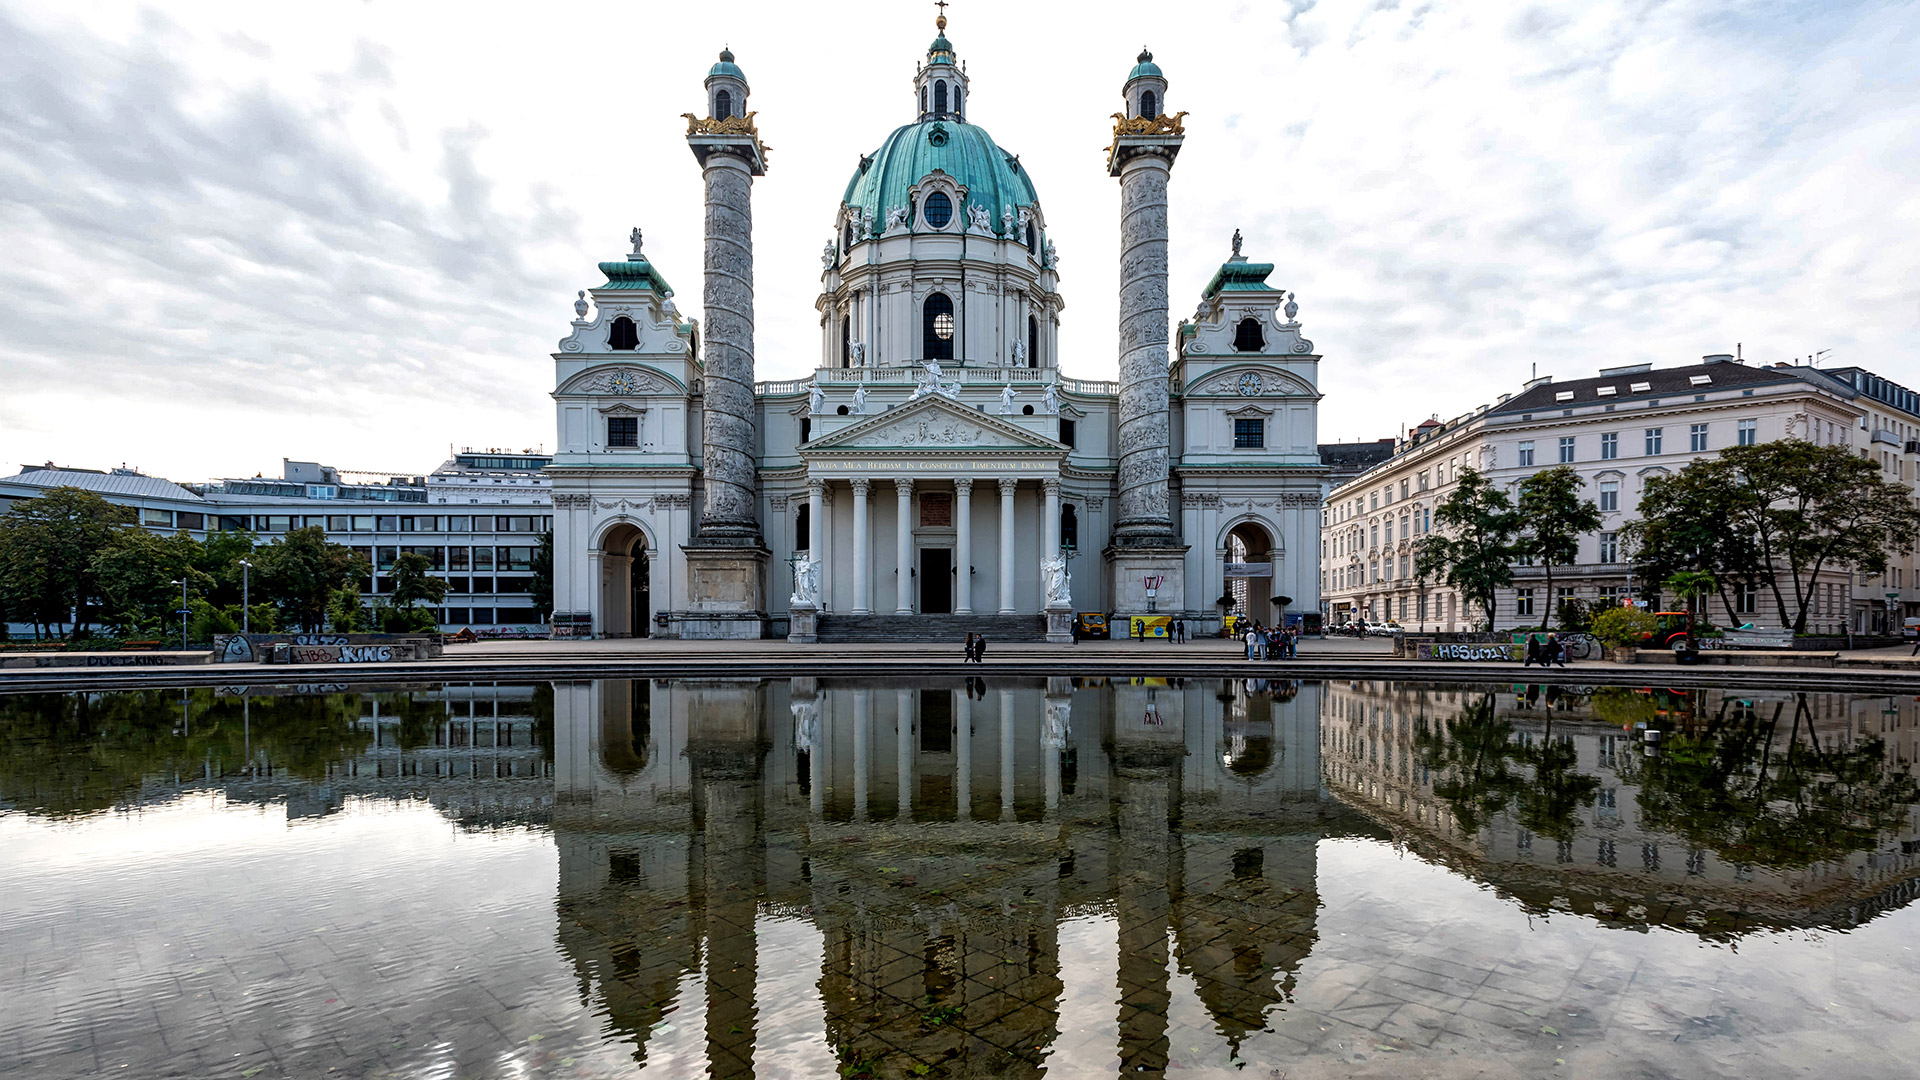 St. Charles Church in Vienna, Austria